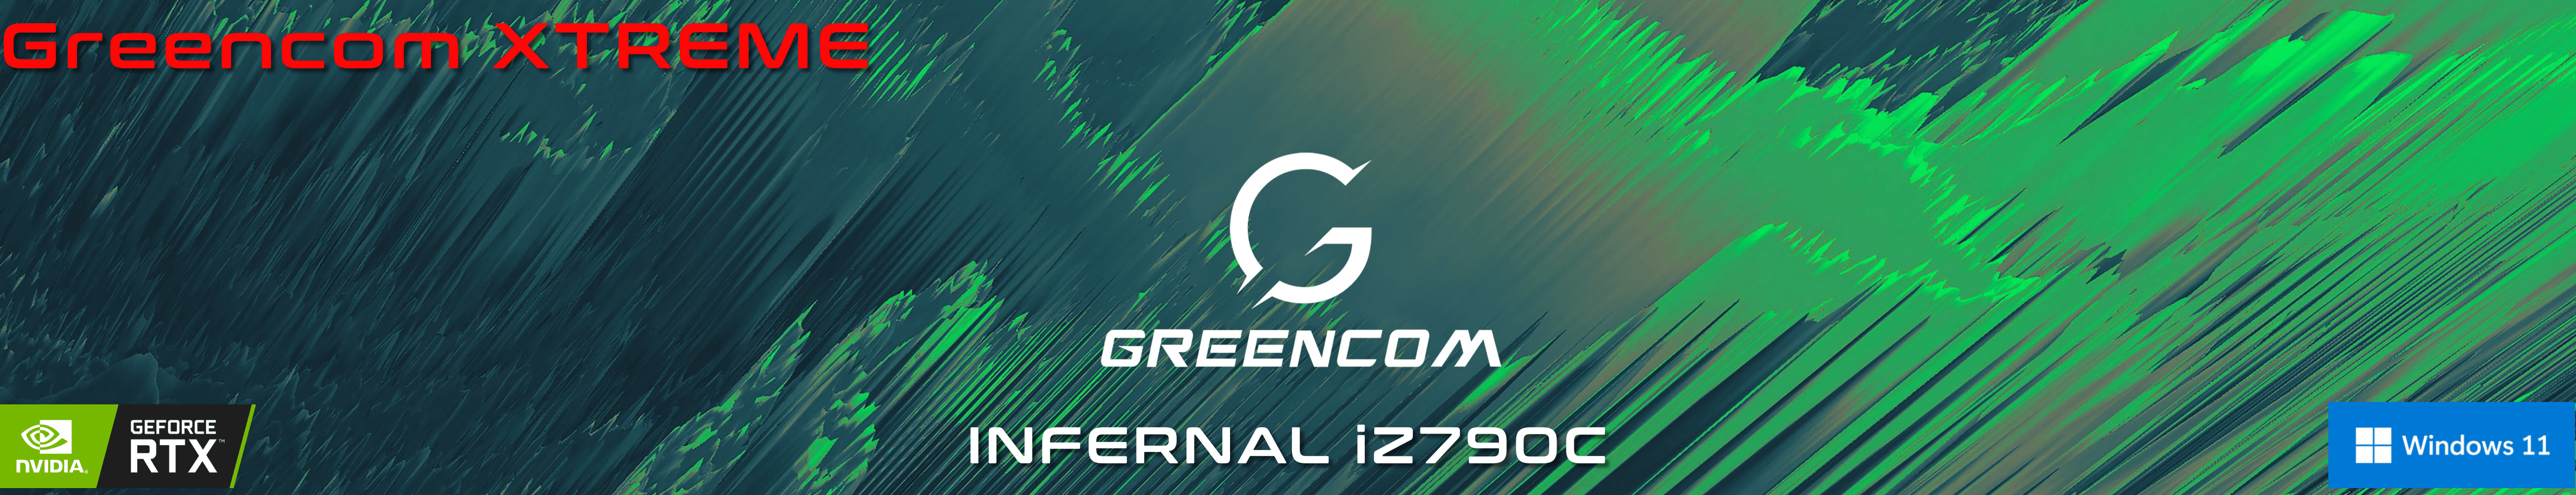 Greencom INFERNAL iZ790C